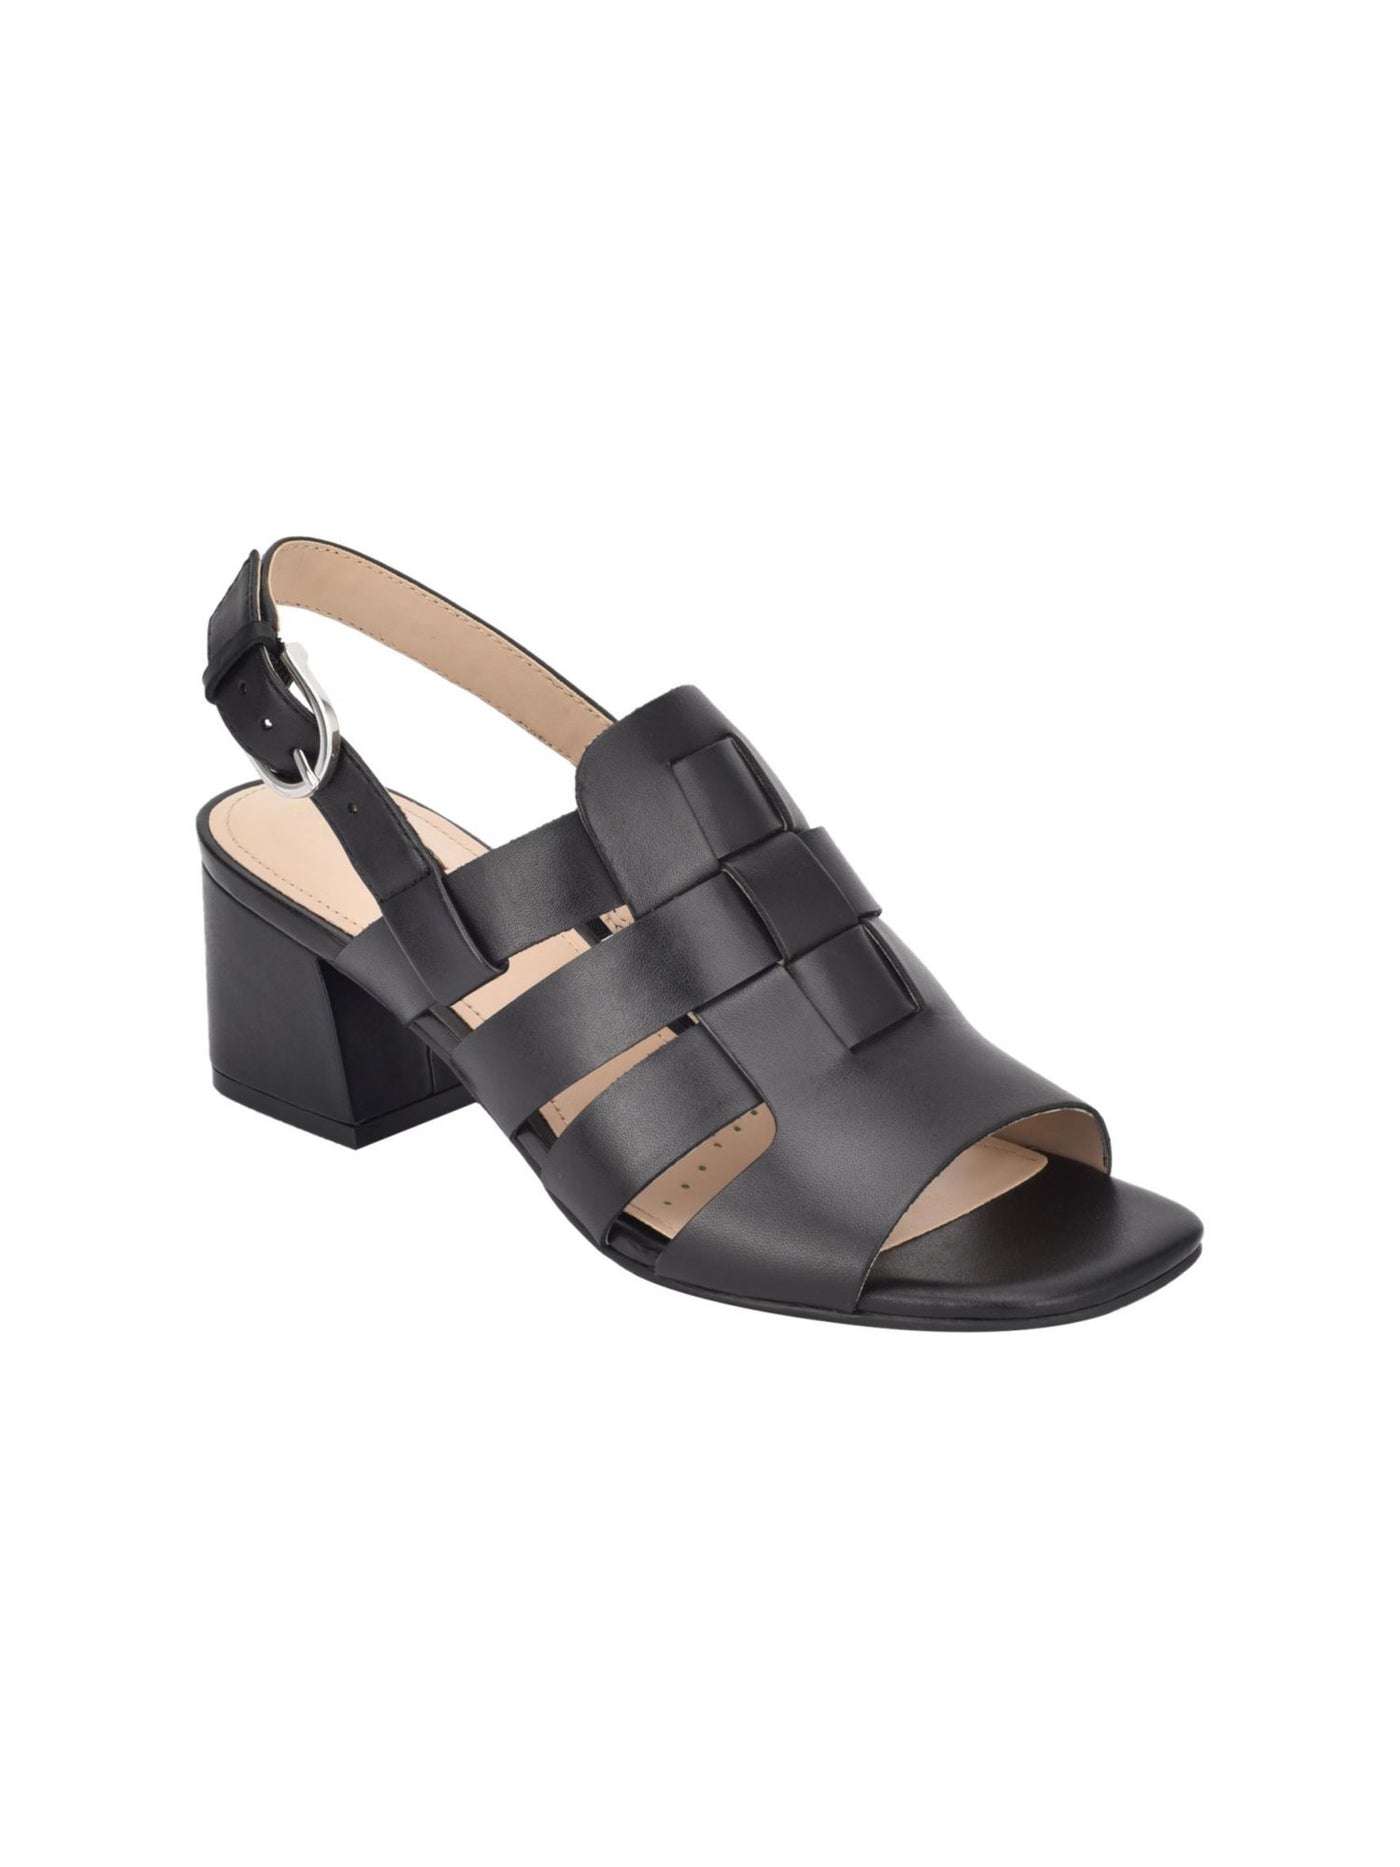 EVOLVE Womens Black Slip Resistant Cushioned Mona Open Toe Block Heel Buckle Dress Sandals Shoes 8